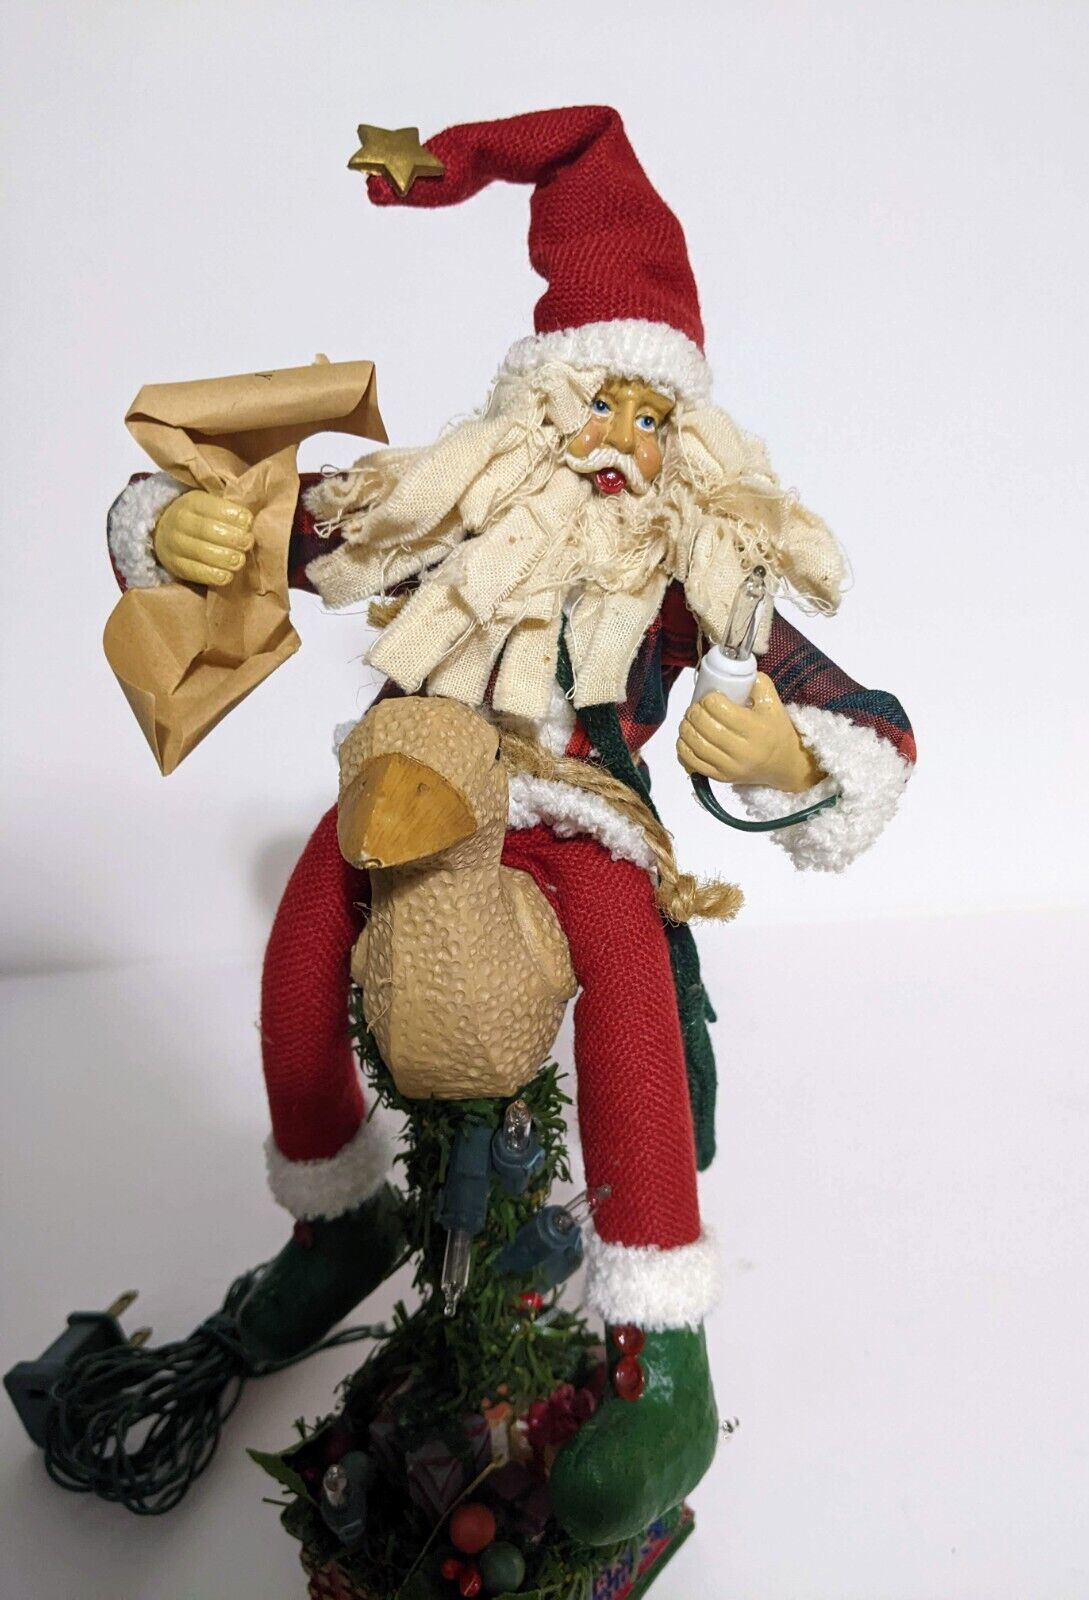 Santa Claus Riding the Christmas Goose Rare Playful Lighted Decoration